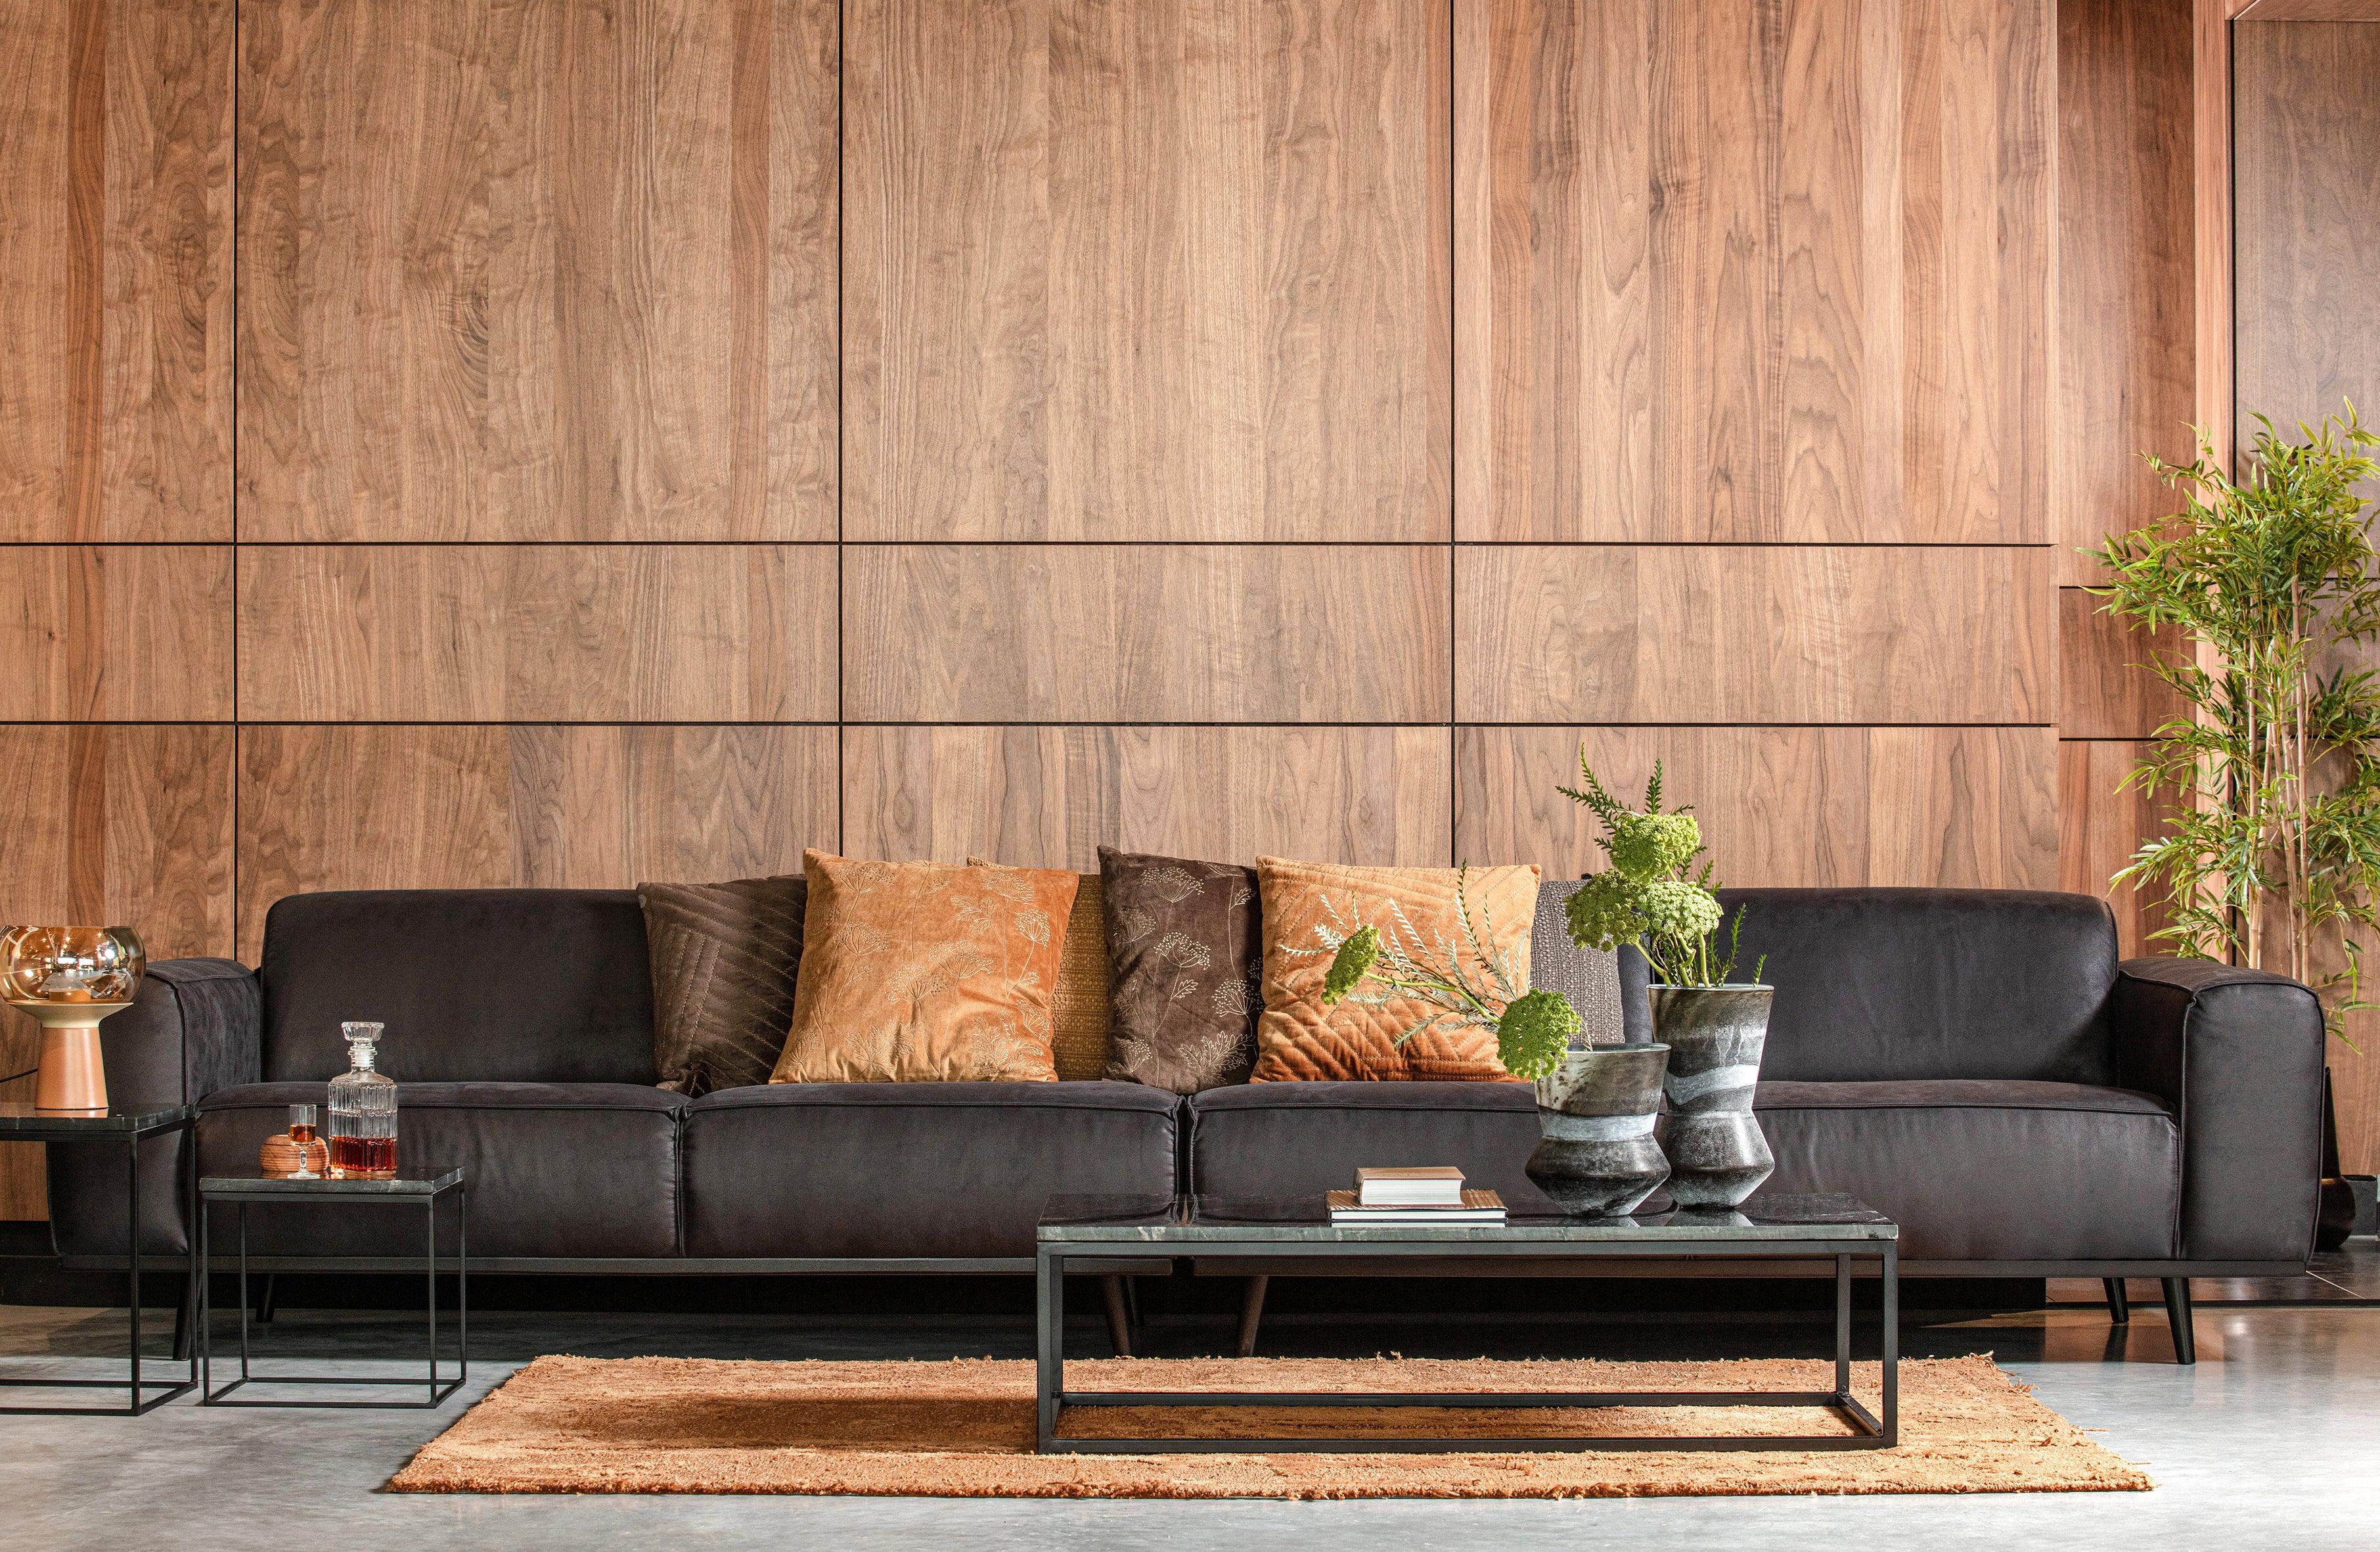 Sofa ekoskóra 4-osobowa STATEMENT taupe Be Pure    Eye on Design